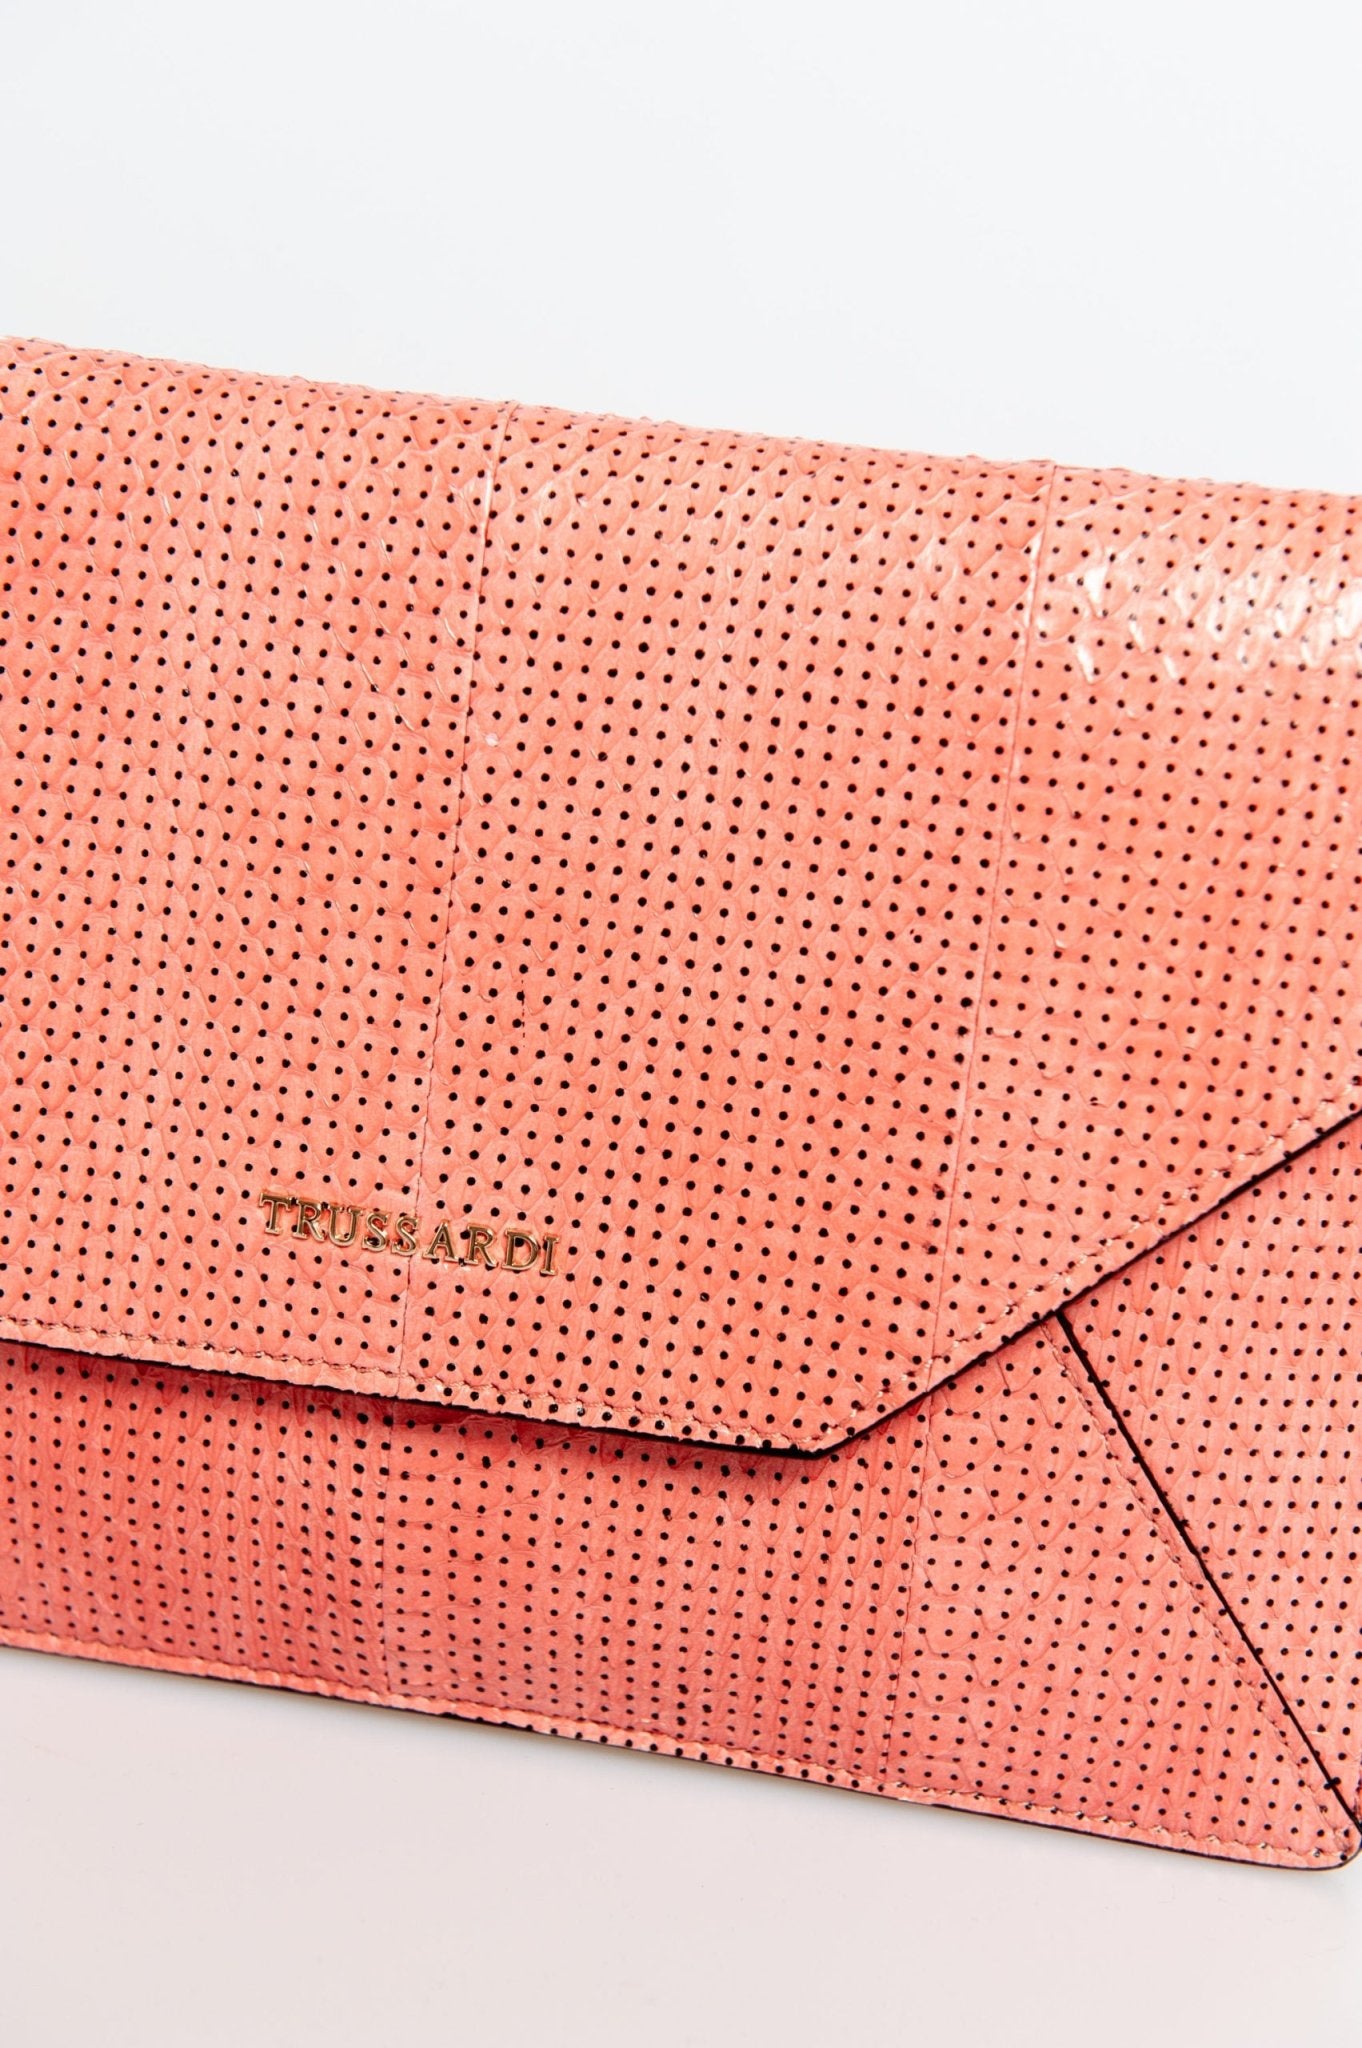 Trussardi Pink Leather Clutch Bag - Fizigo